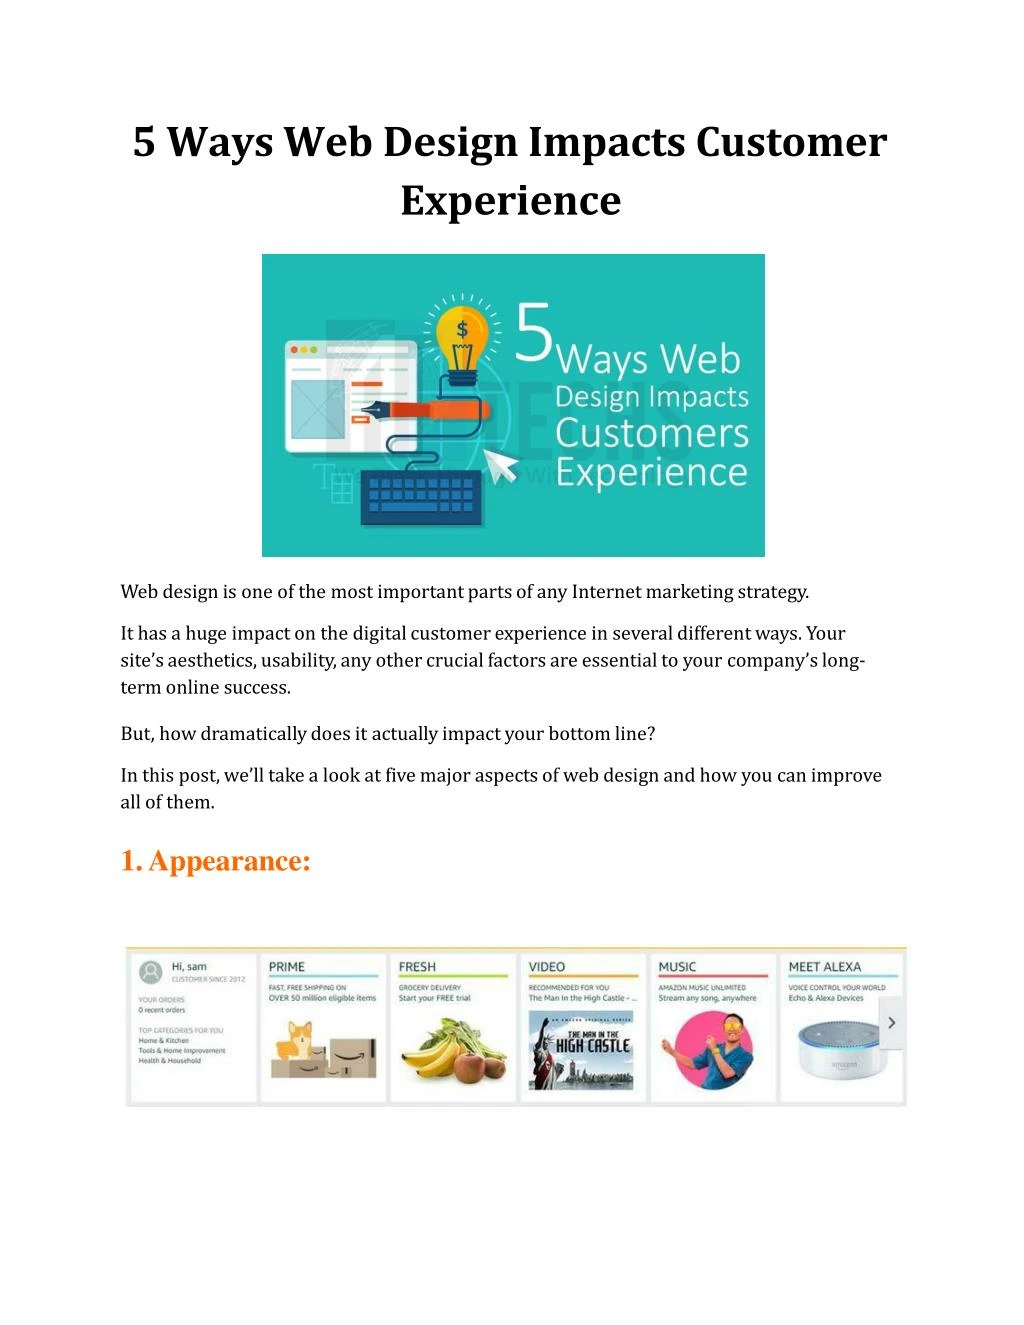 5 ways web design impacts customer experience